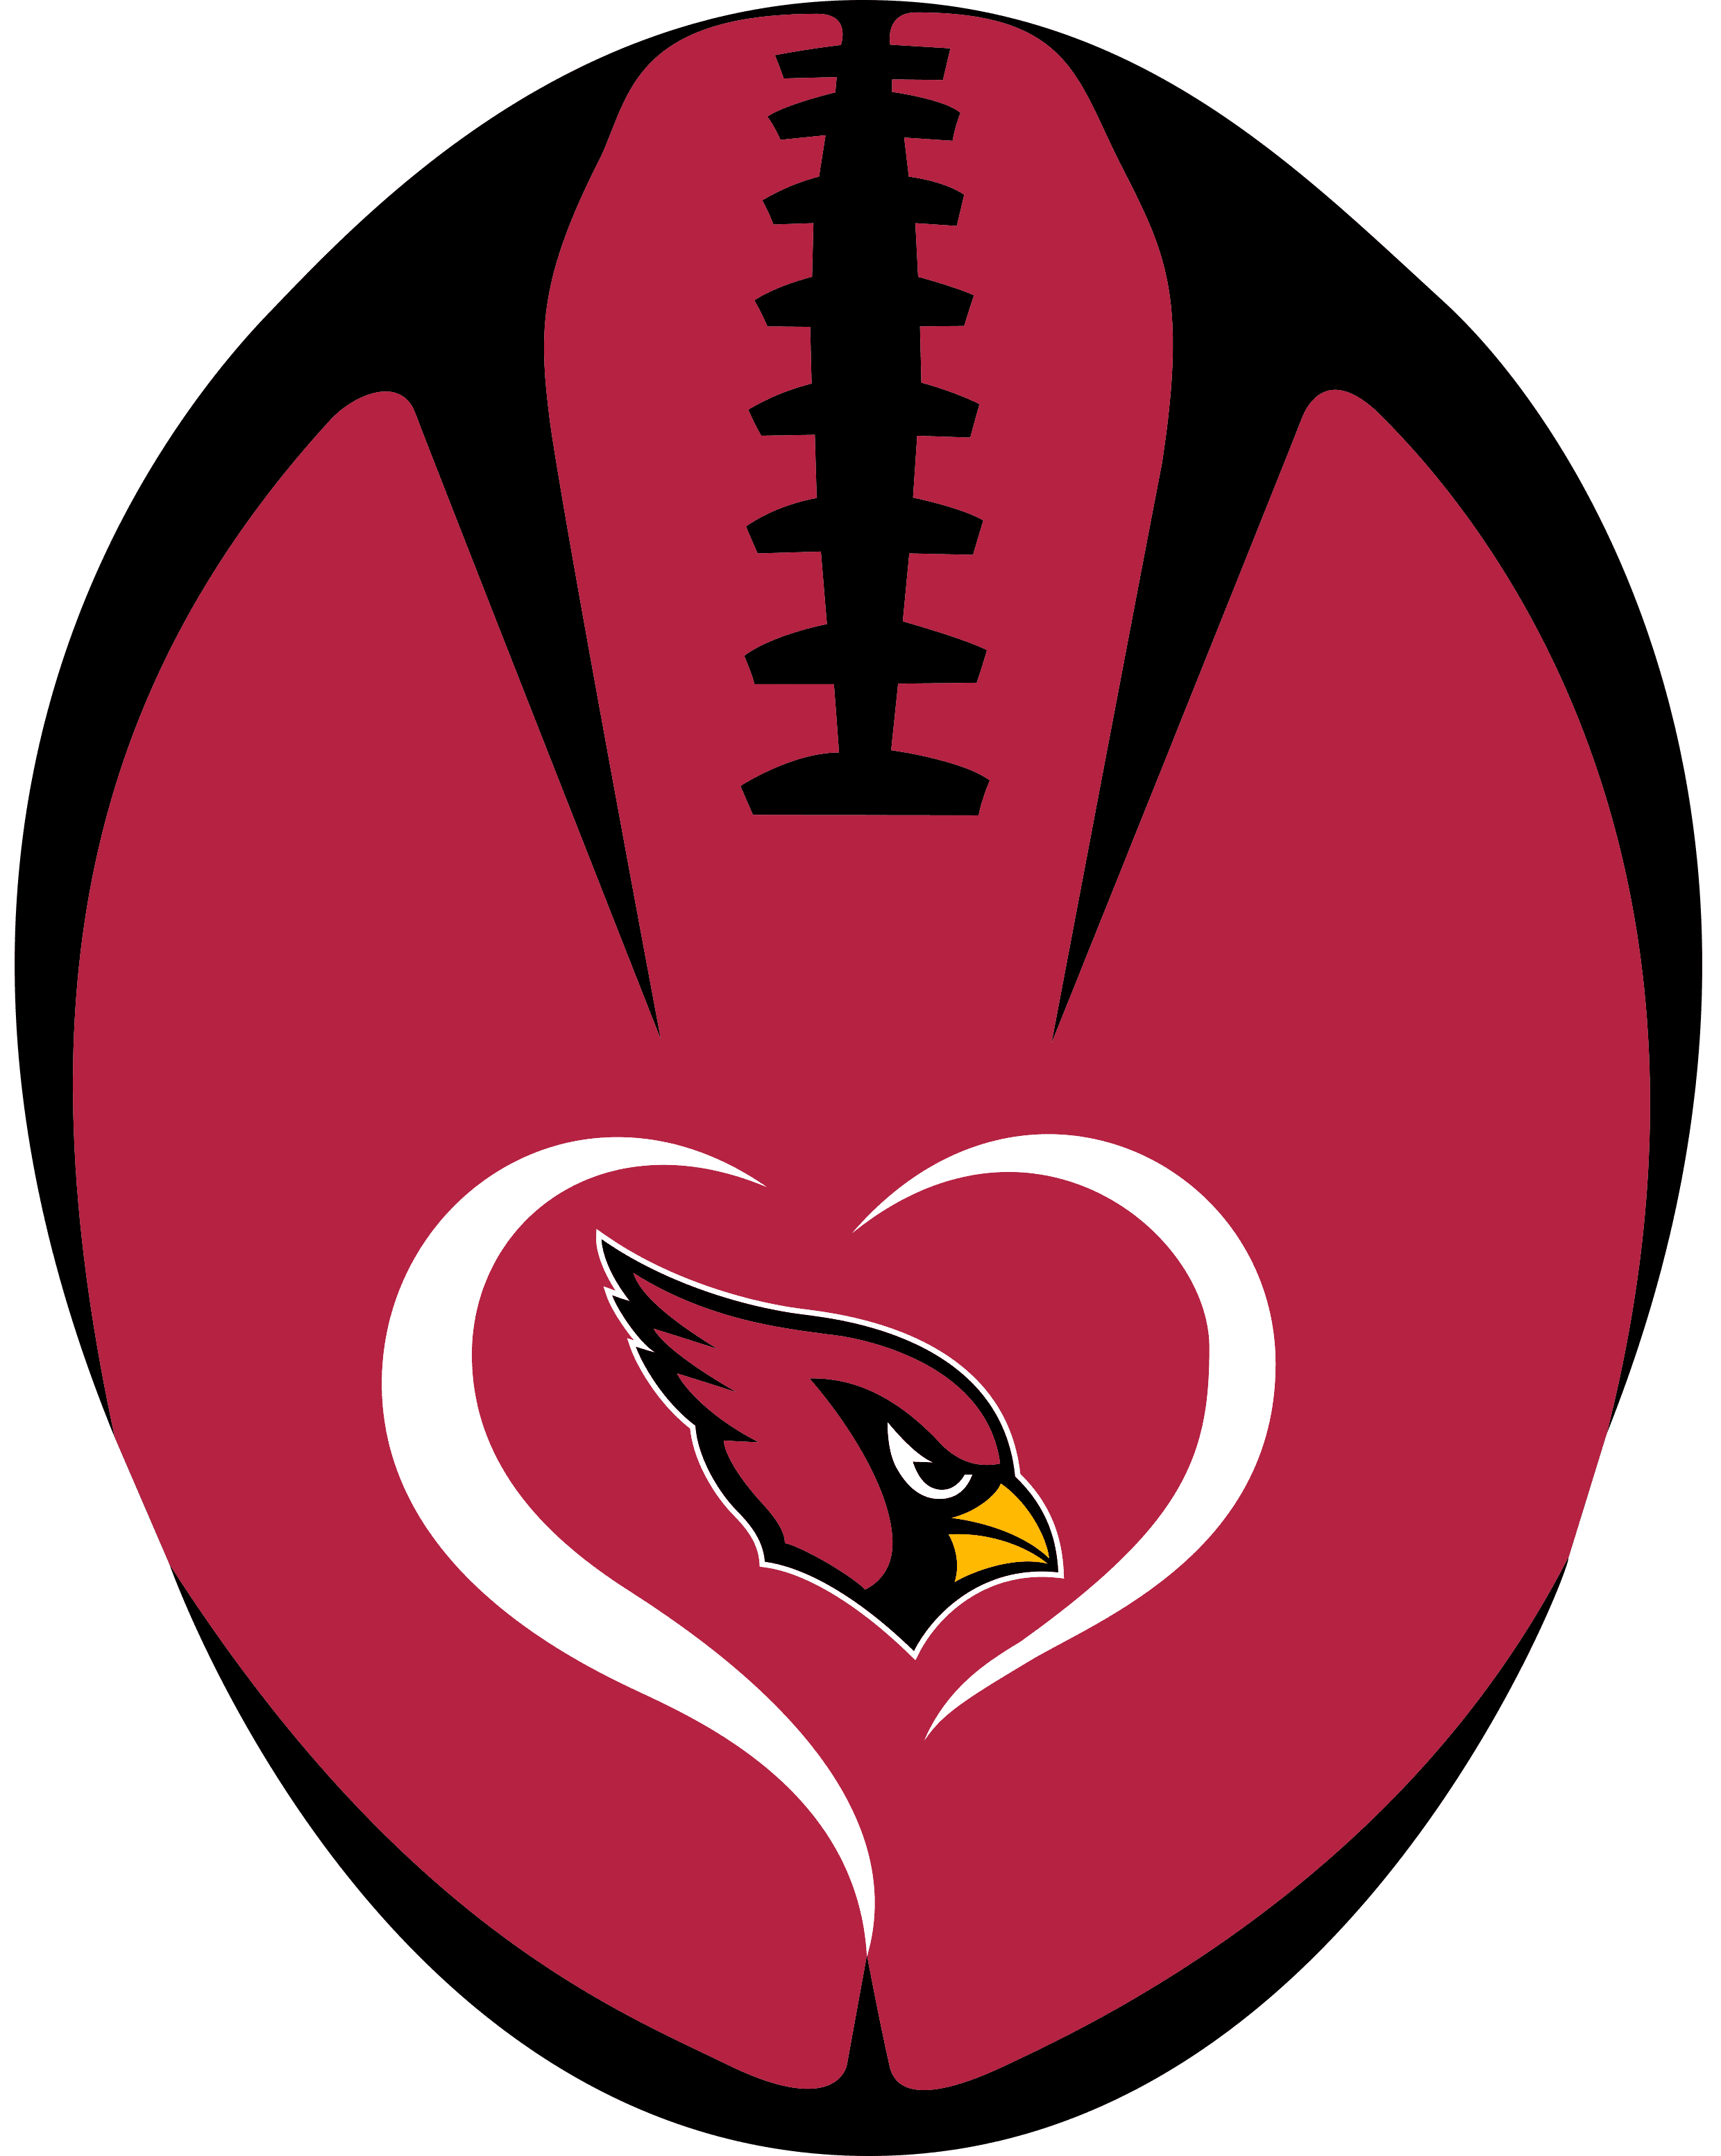 nfl cardinals logo vector